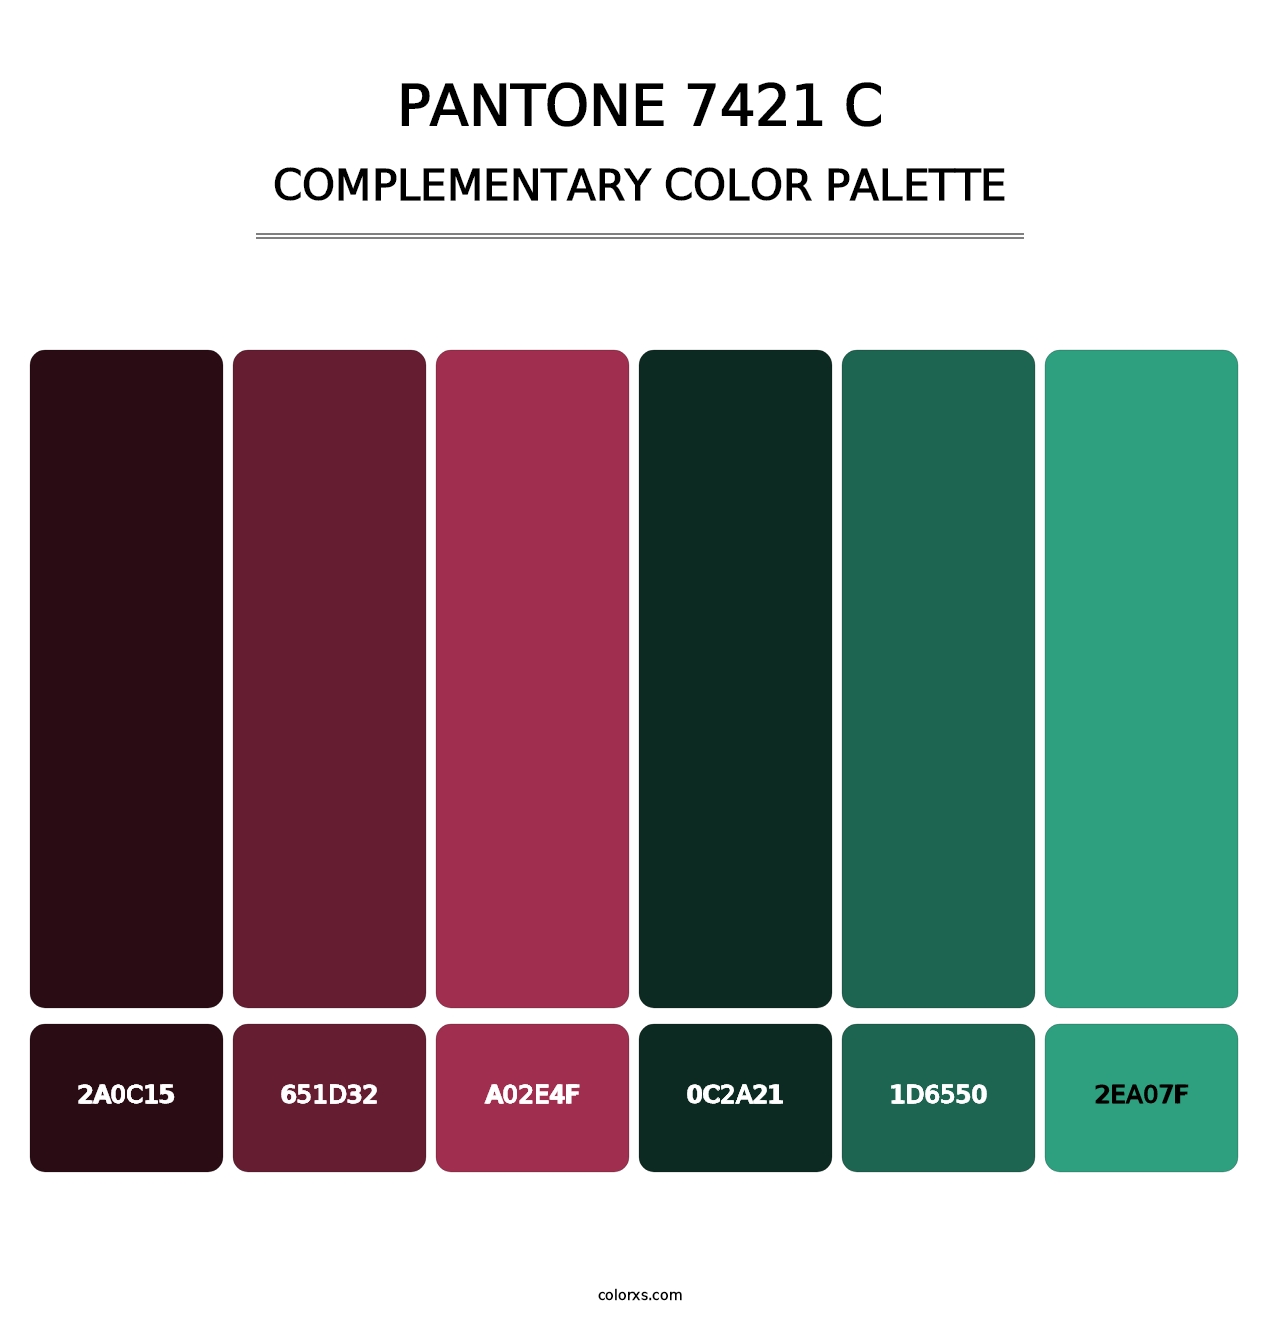 PANTONE 7421 C - Complementary Color Palette